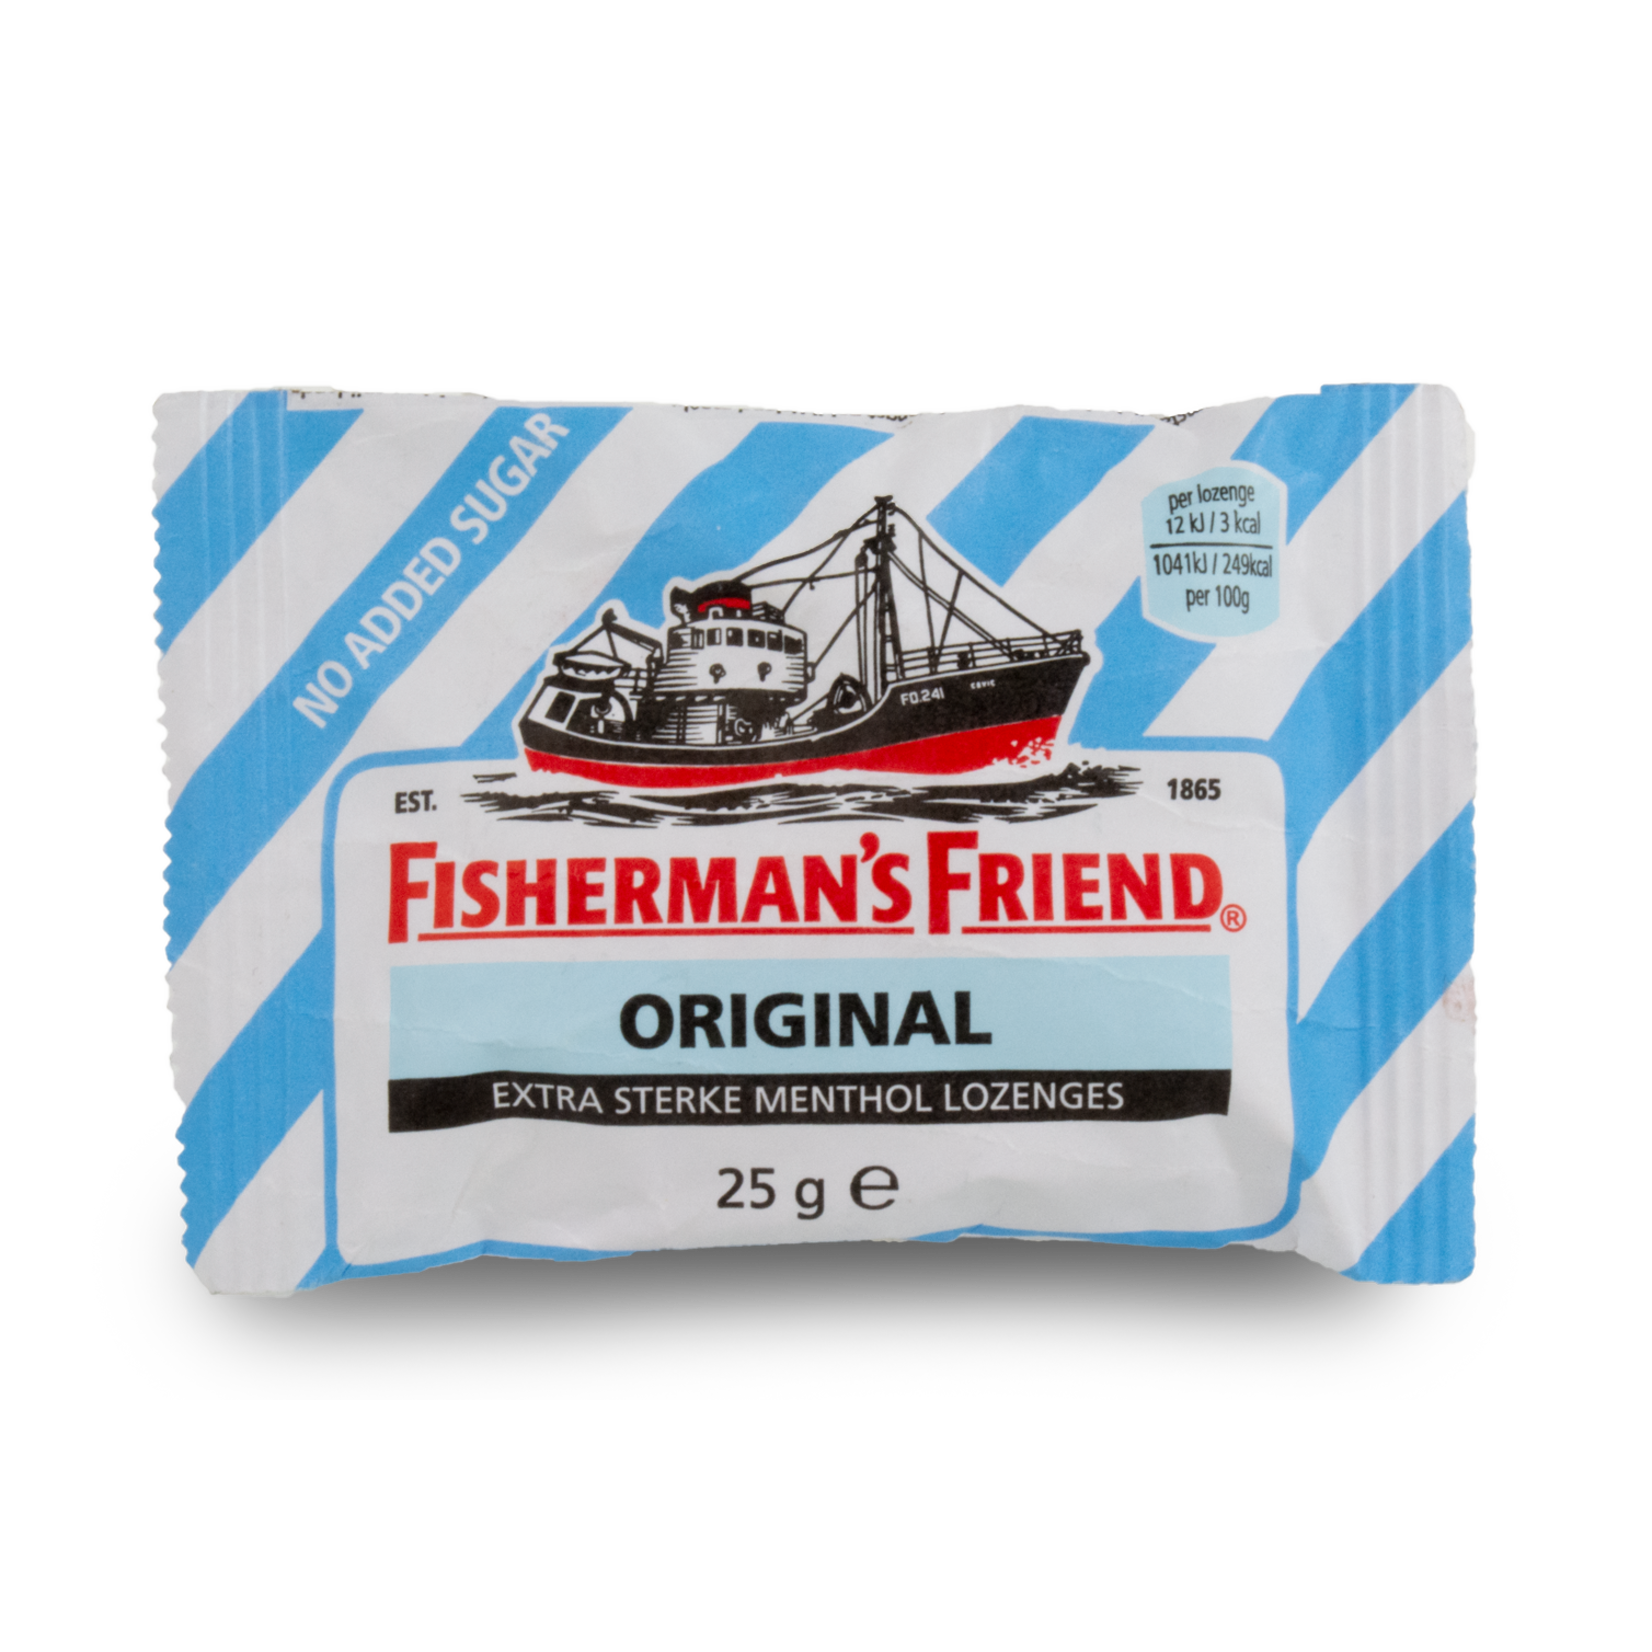 Fisherman's Friend Fisherman's Friend Original Extra Strong Sugar Free 25g